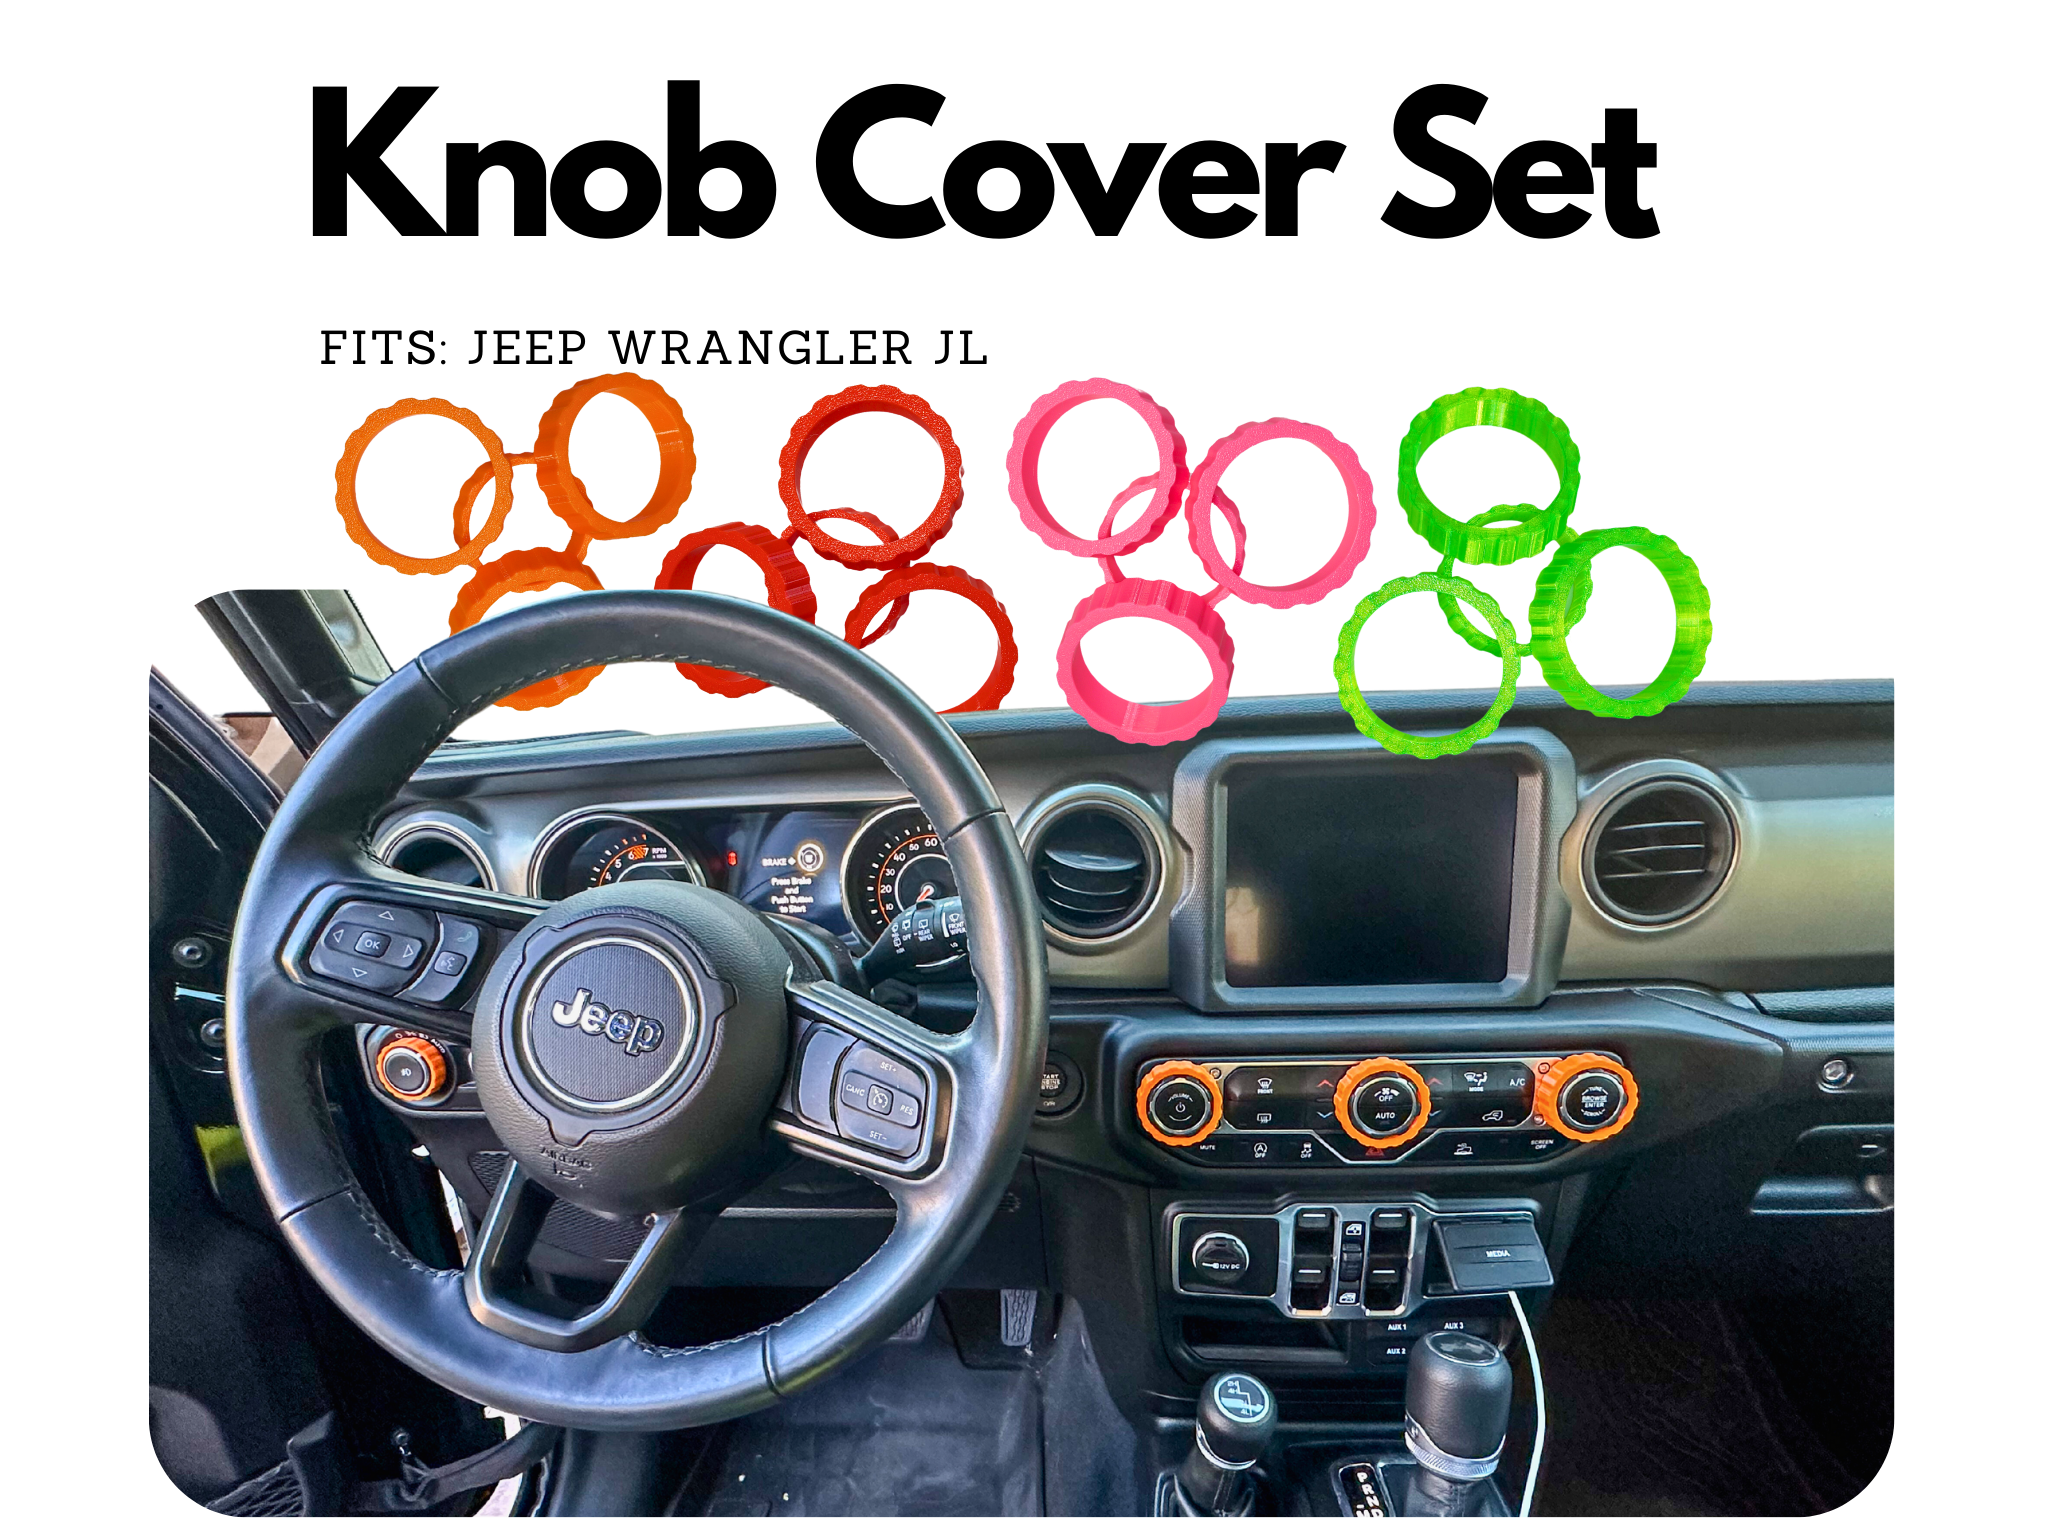 Knob Cover Set for Jeep Wrangler JL, Gladiator Rubicon 392, Wrangler, Willys, 4xe, Sahara, Rubicon, High Altitude, interior accessories